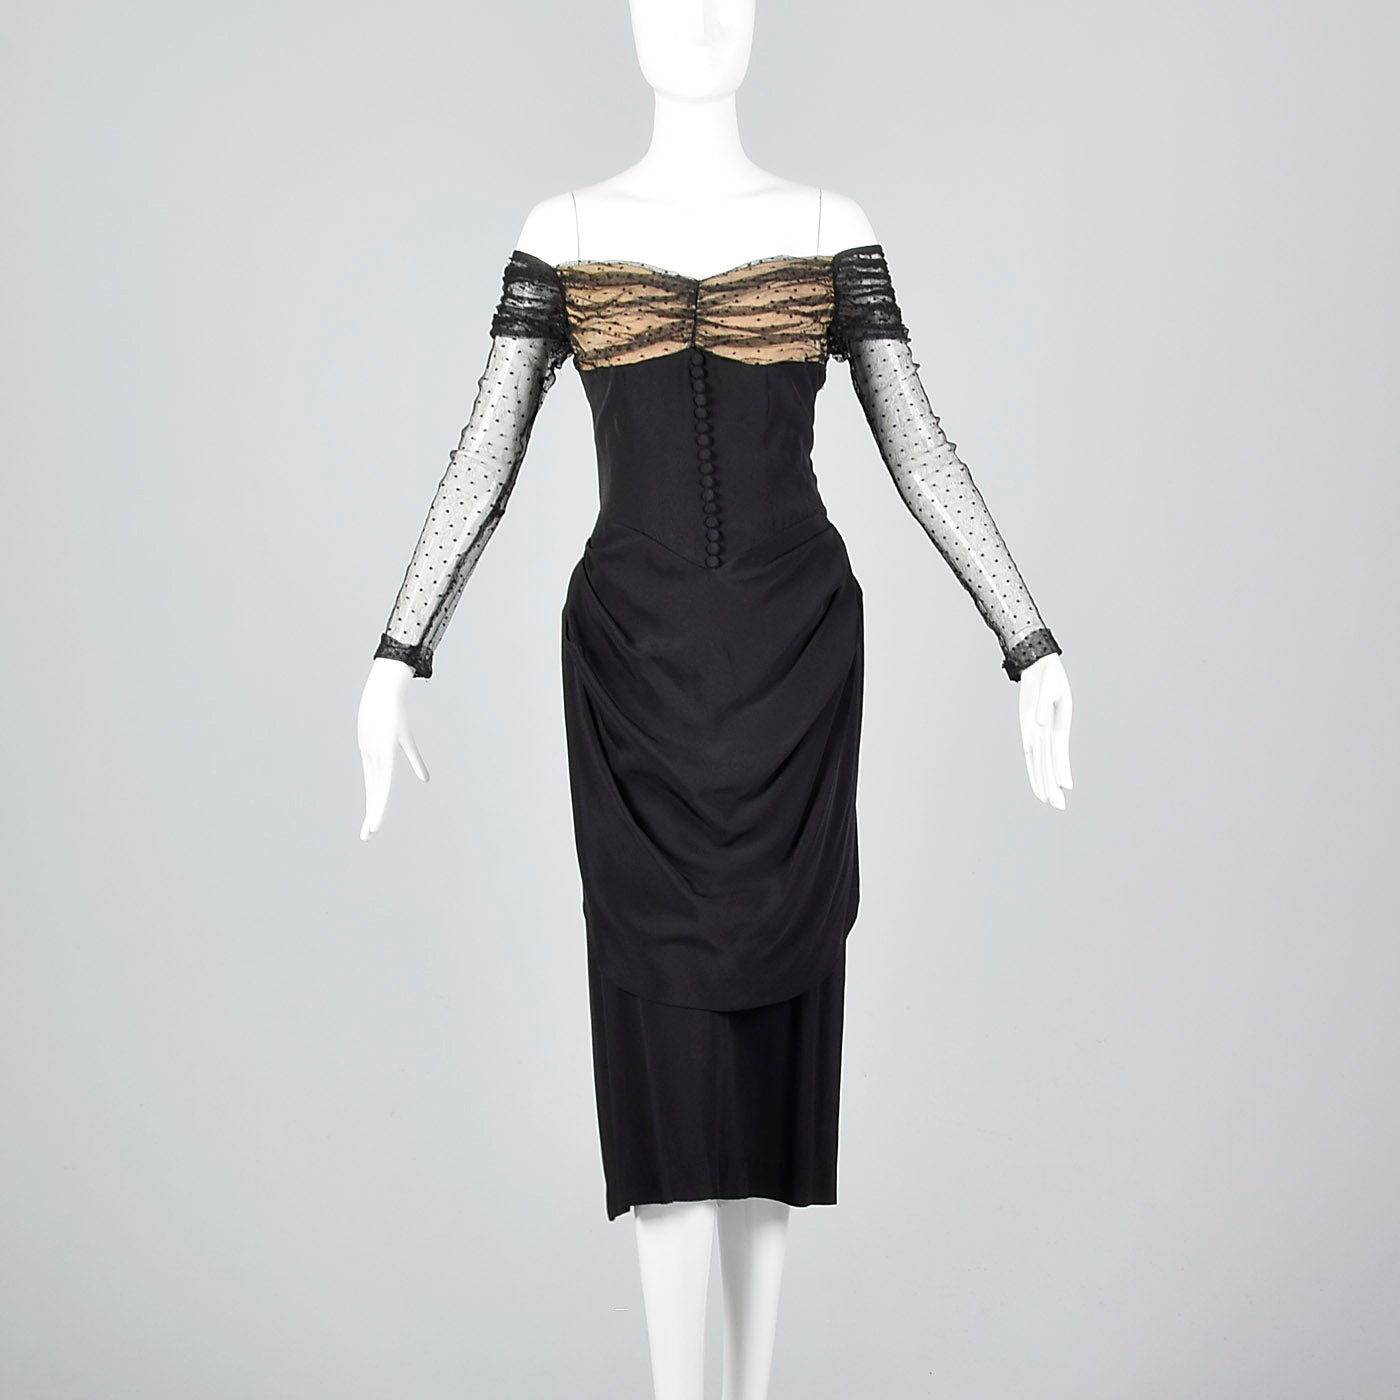 1950s Black Dress with Lace Illusion Neckline